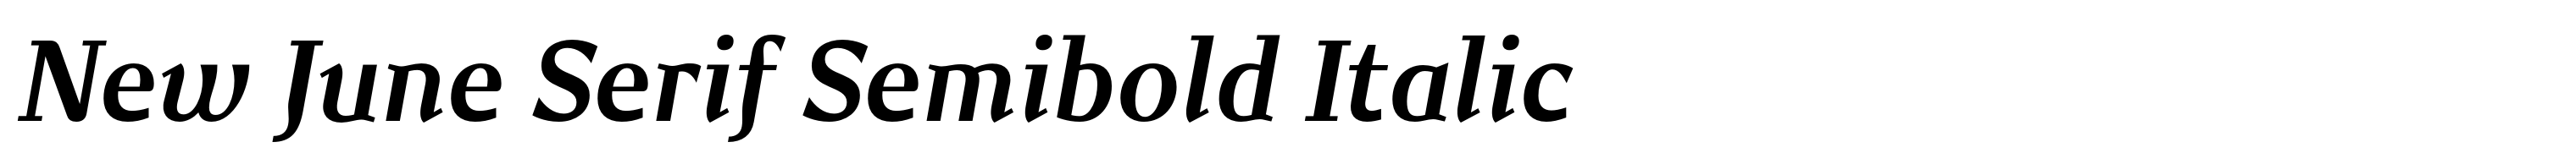 New June Serif Semibold Italic